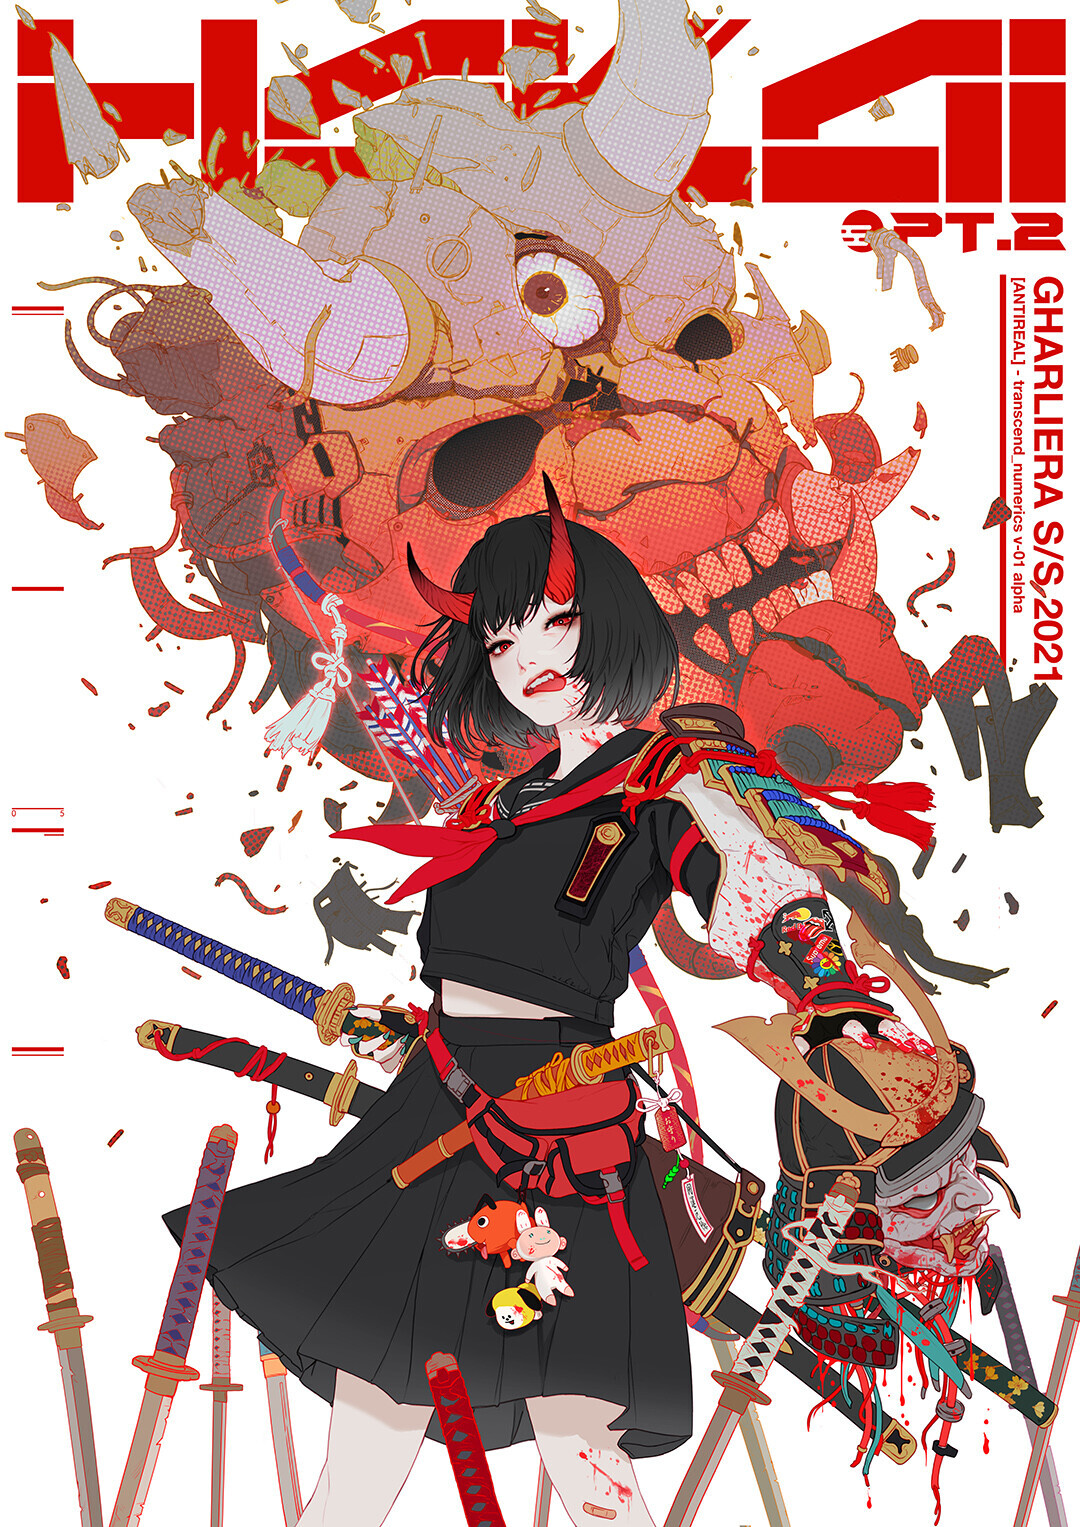 Desktop Wallpaper Samurai Anime Girl Art Sword Hd Image Picture  Background 1129d9